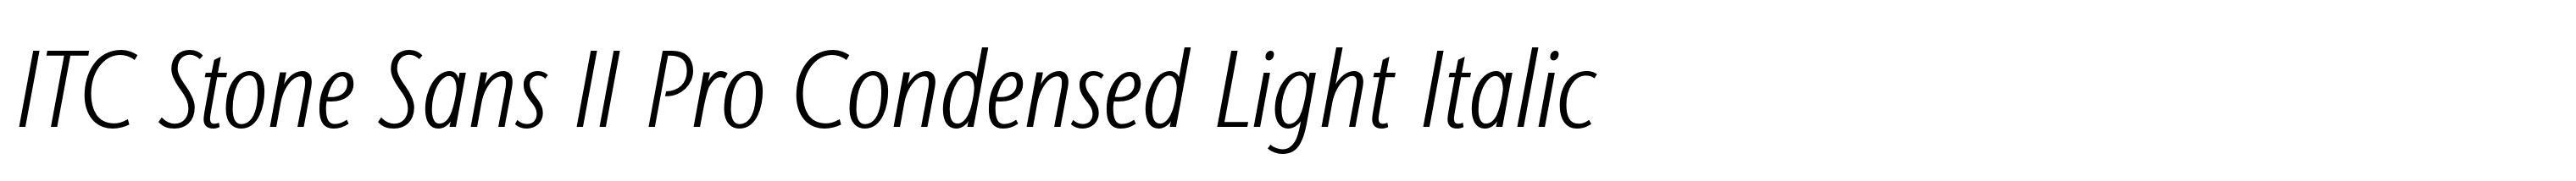 ITC Stone Sans II Pro Condensed Light Italic